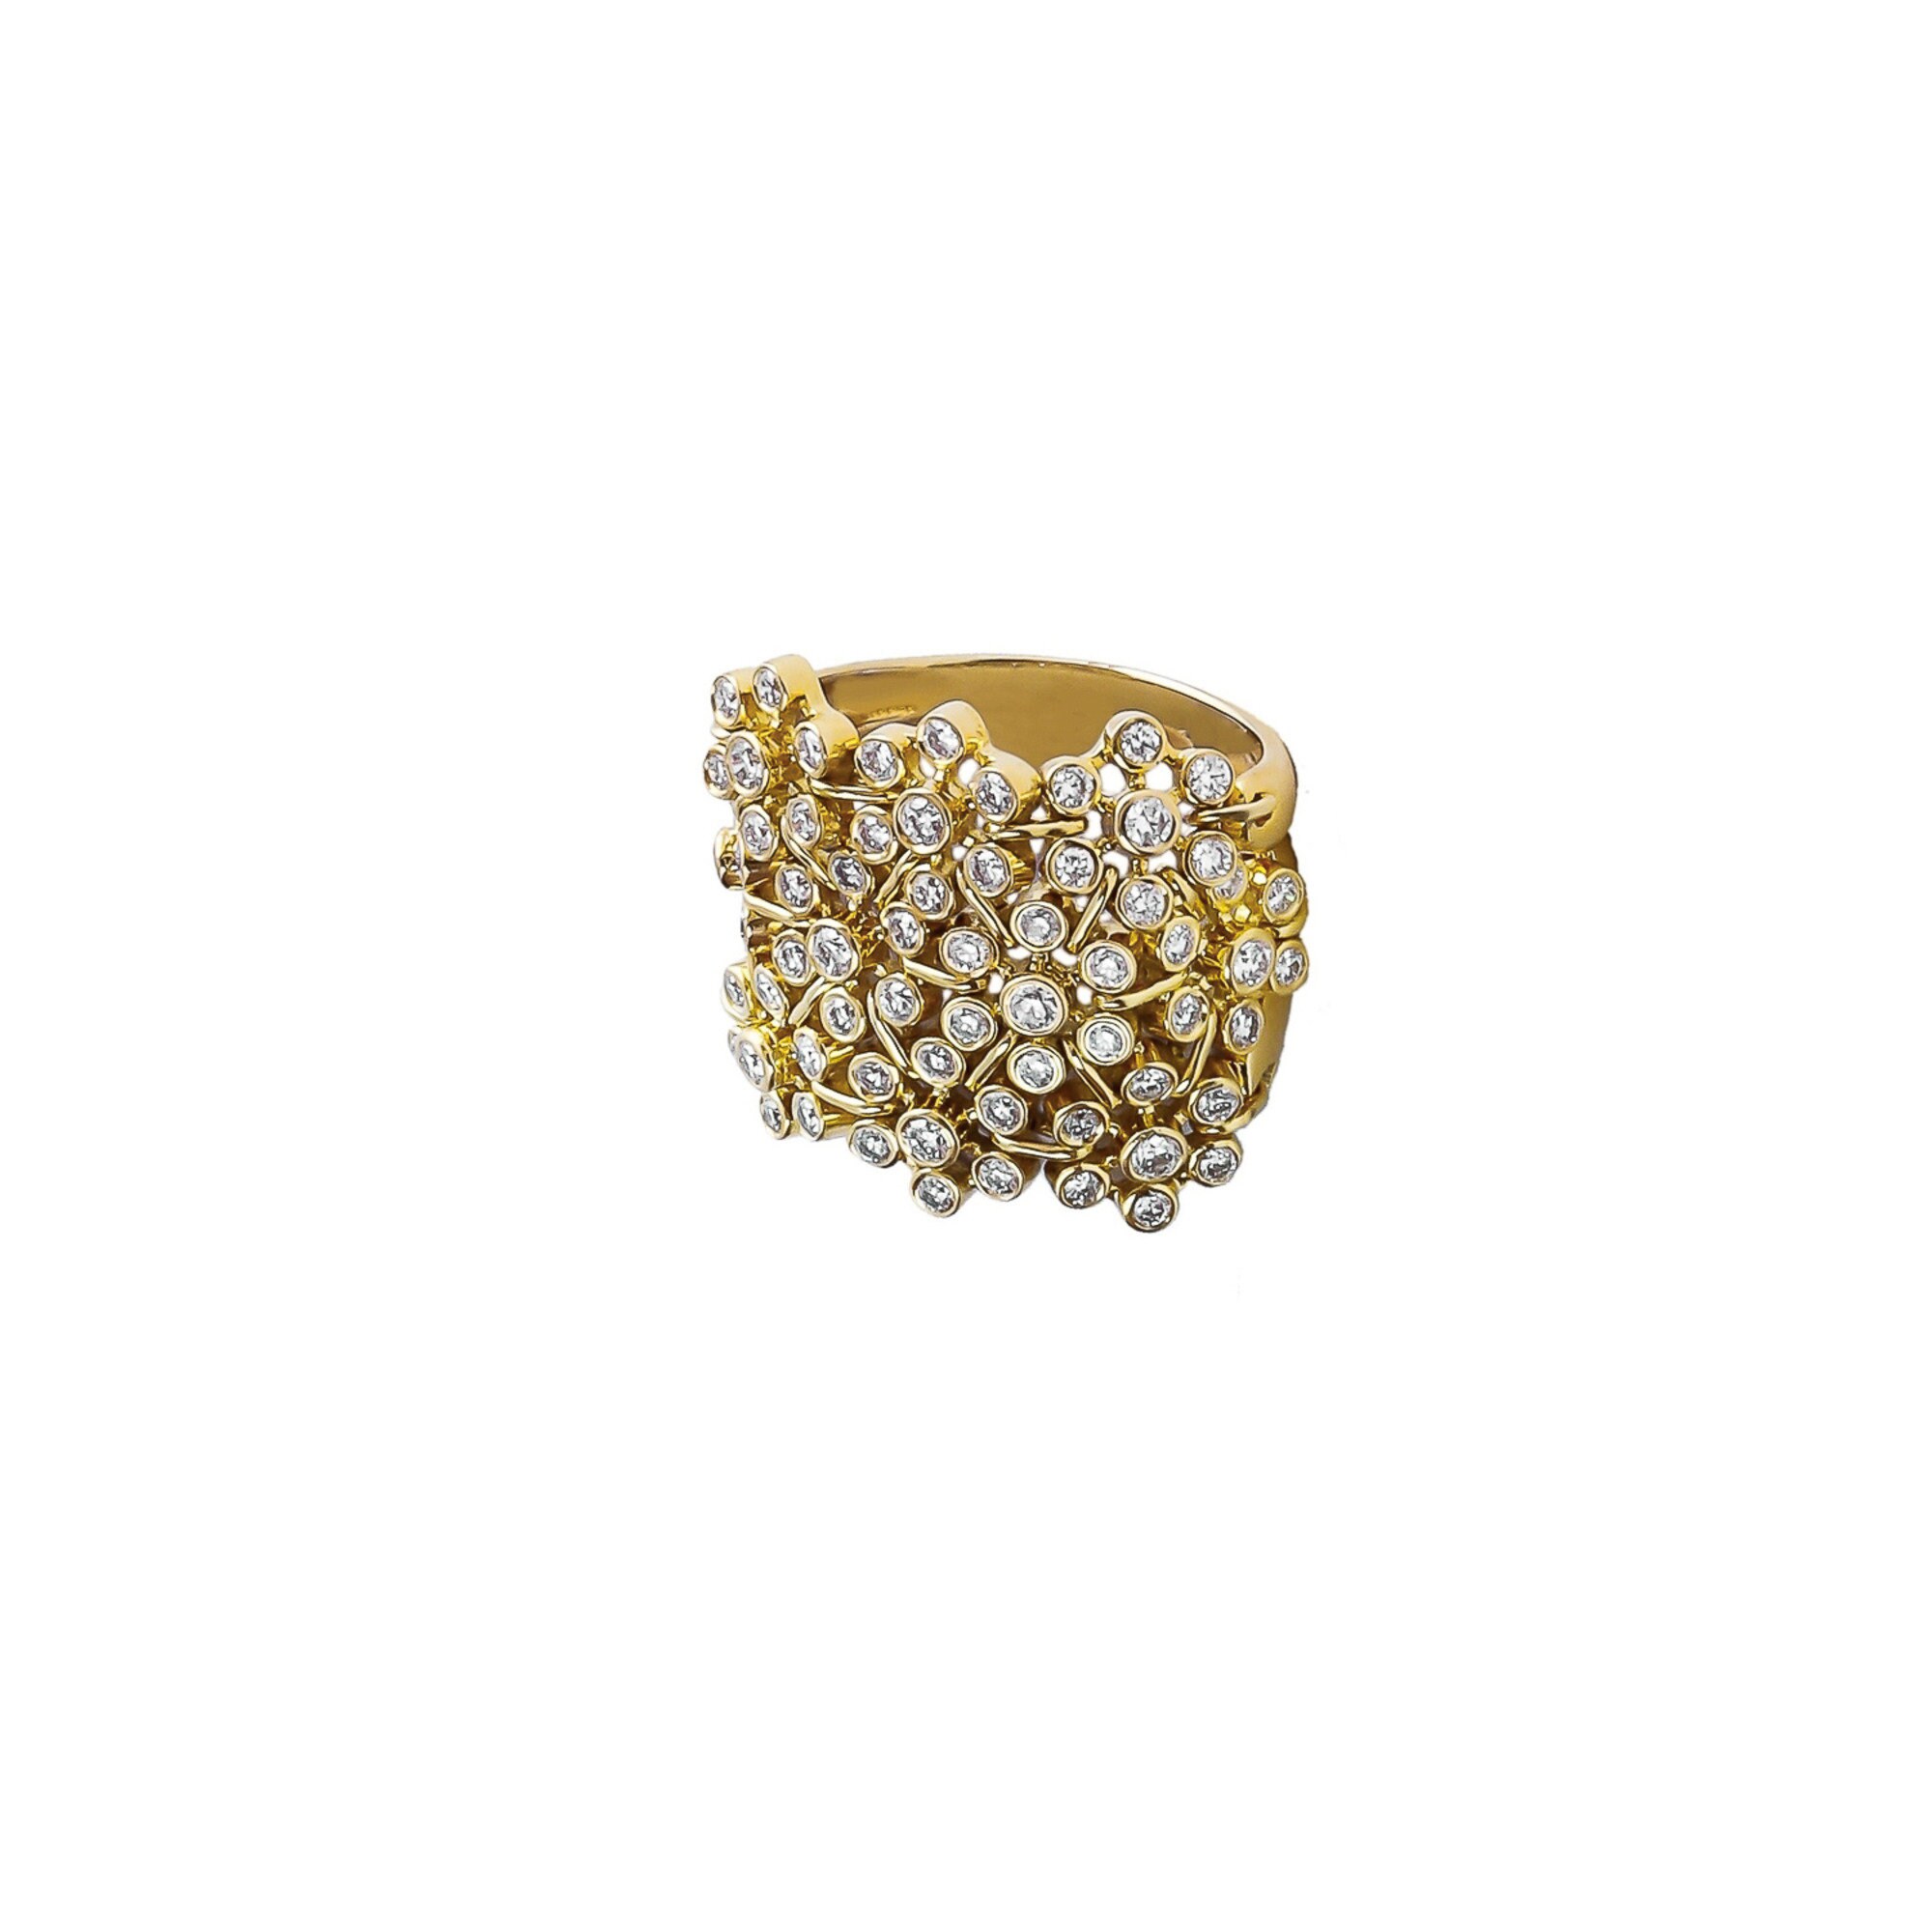 18k Gold & Diamond Ring Engagement Ring Wedding Gift | Etsy